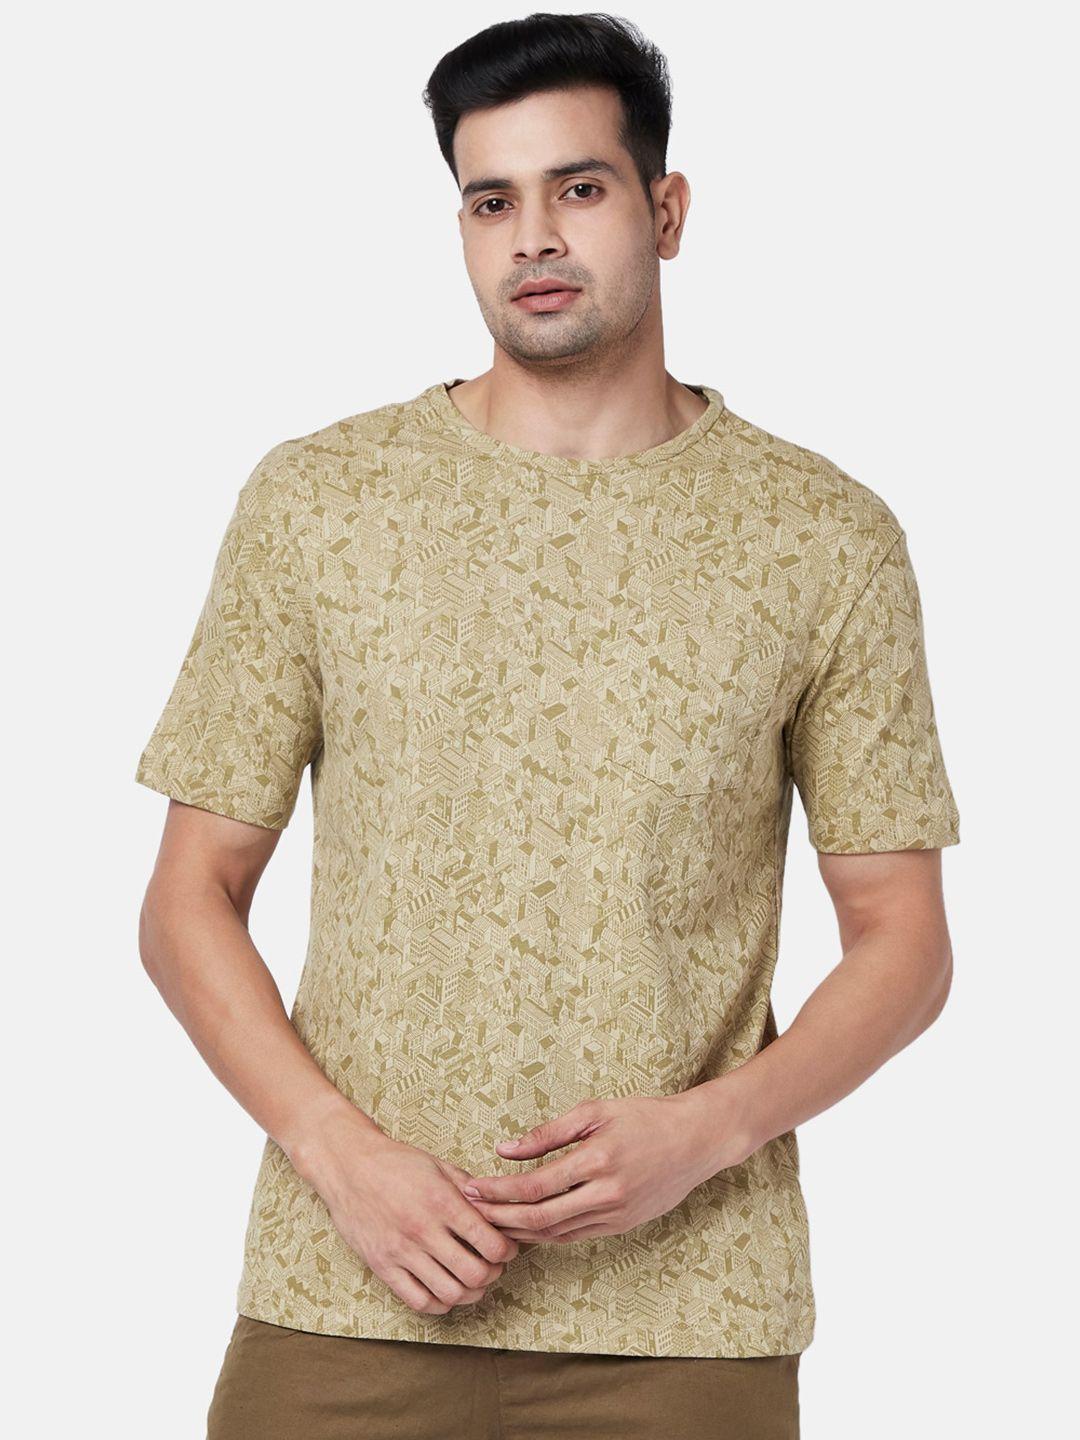 7-alt-by-pantaloons-conversational-printed-cotton-t-shirt